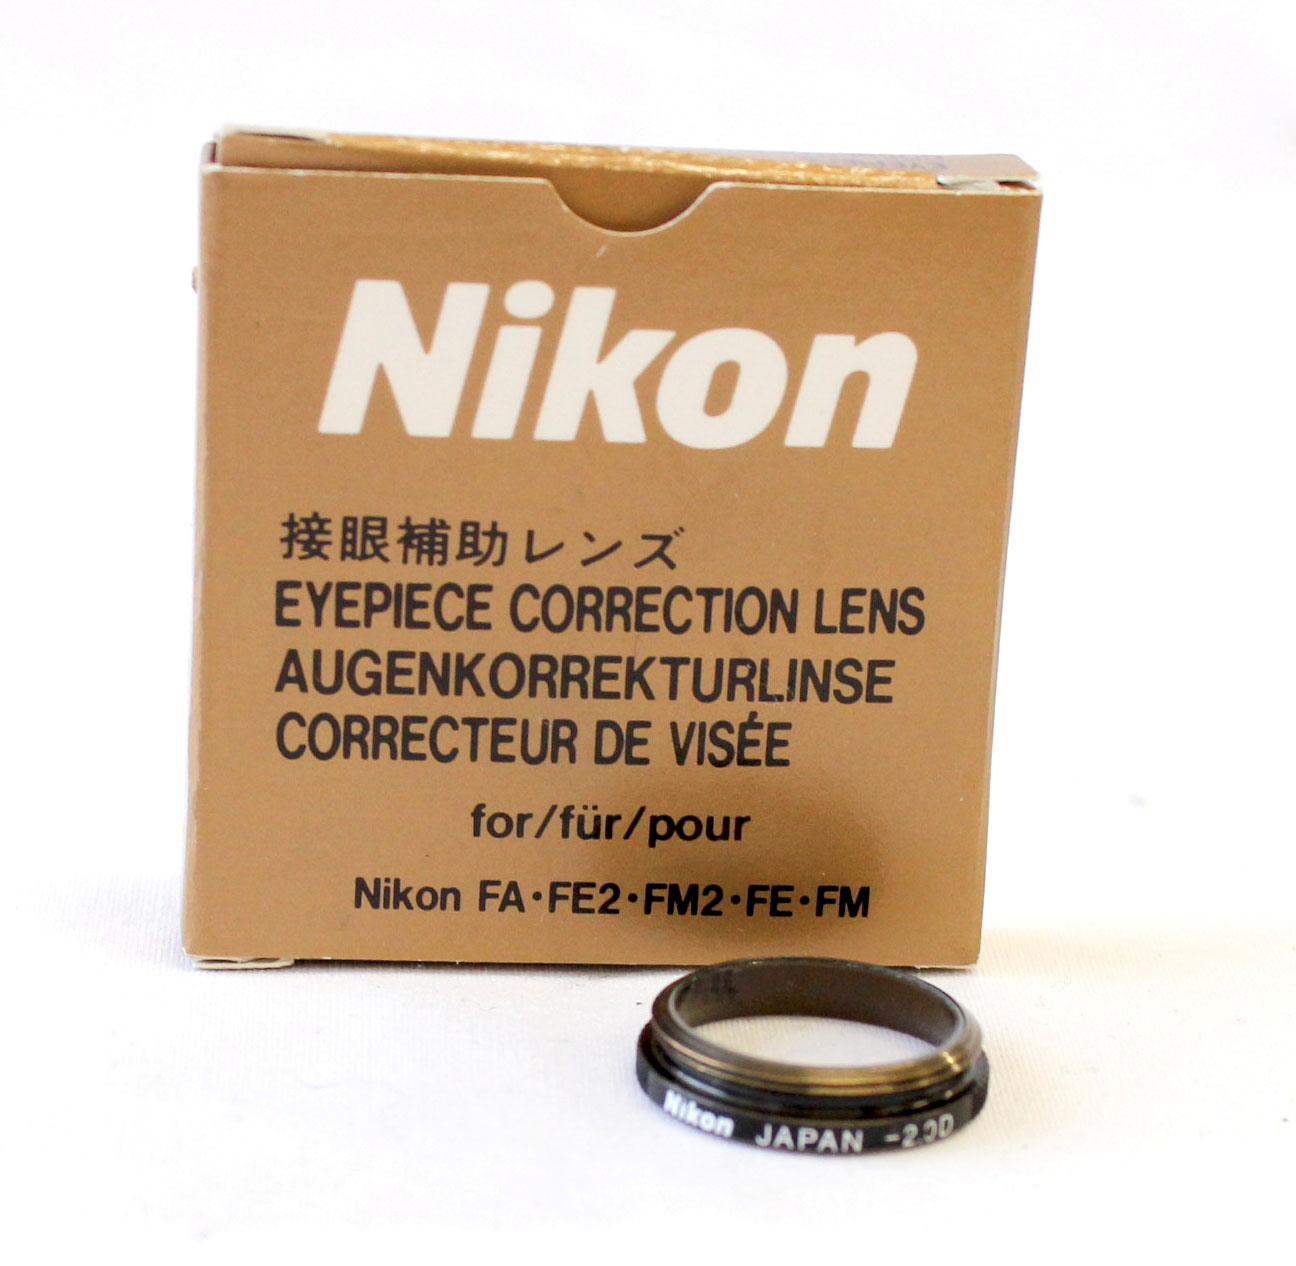 Japan Used Camera Shop | Nikon Eyepiece Correction Lens -2.0 Diopter for Nikon FA, FE2, FM2, FE, FM from Japan